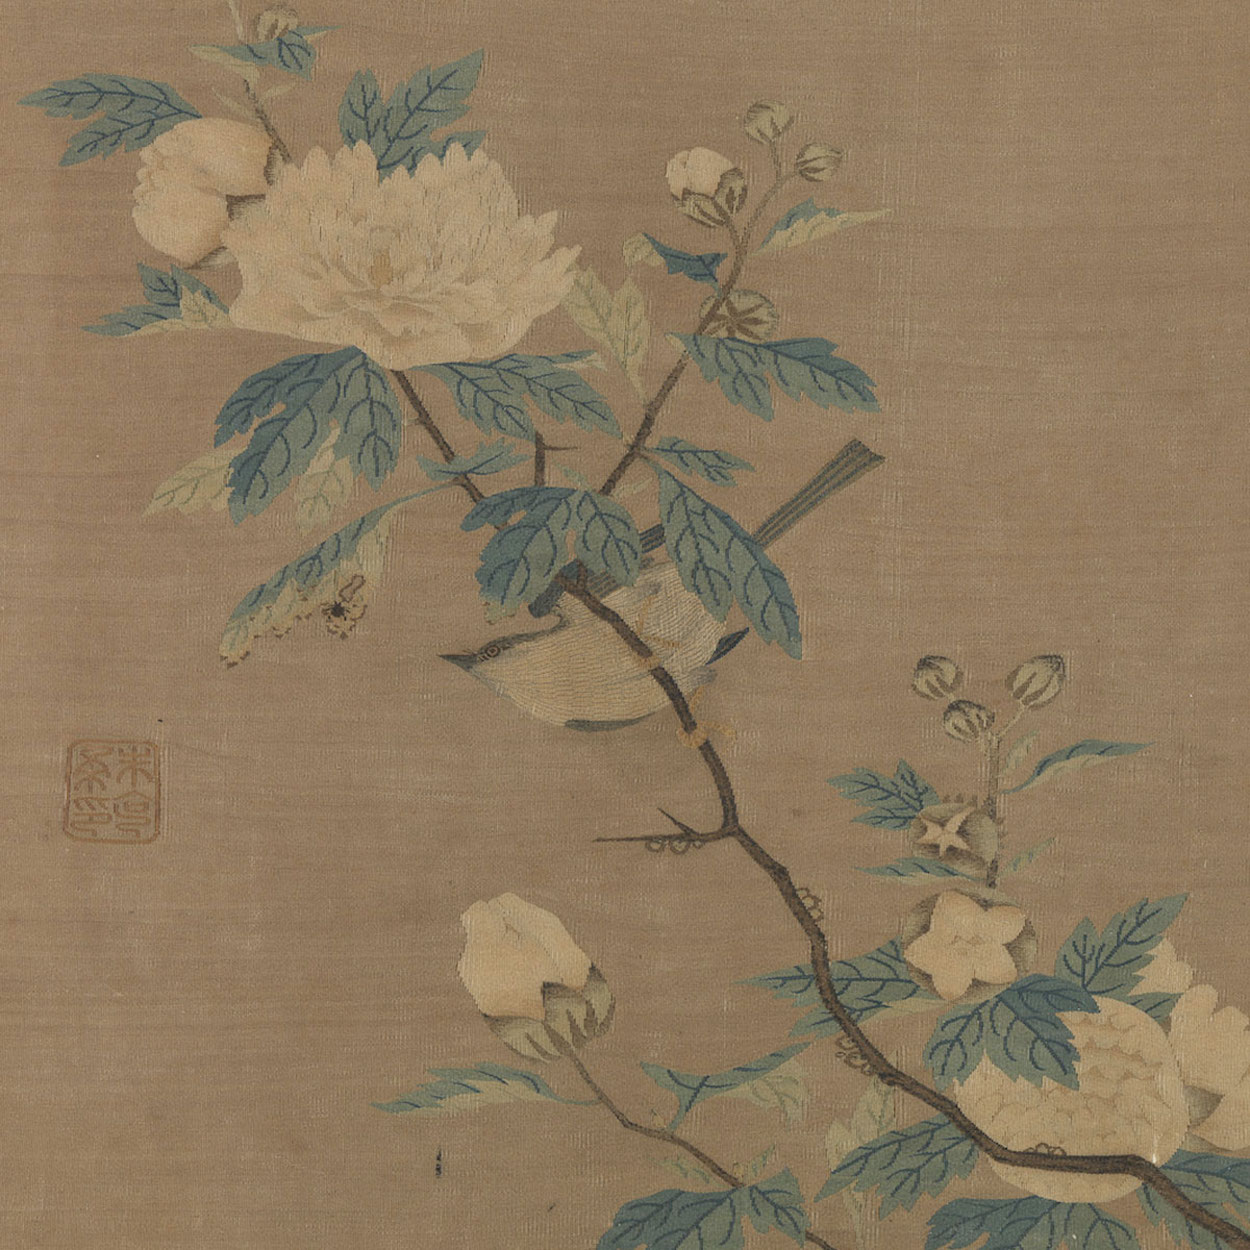 Bird and Flowers by Zhu Kerou - between 1127-1279 National Palace Museum, Taipei